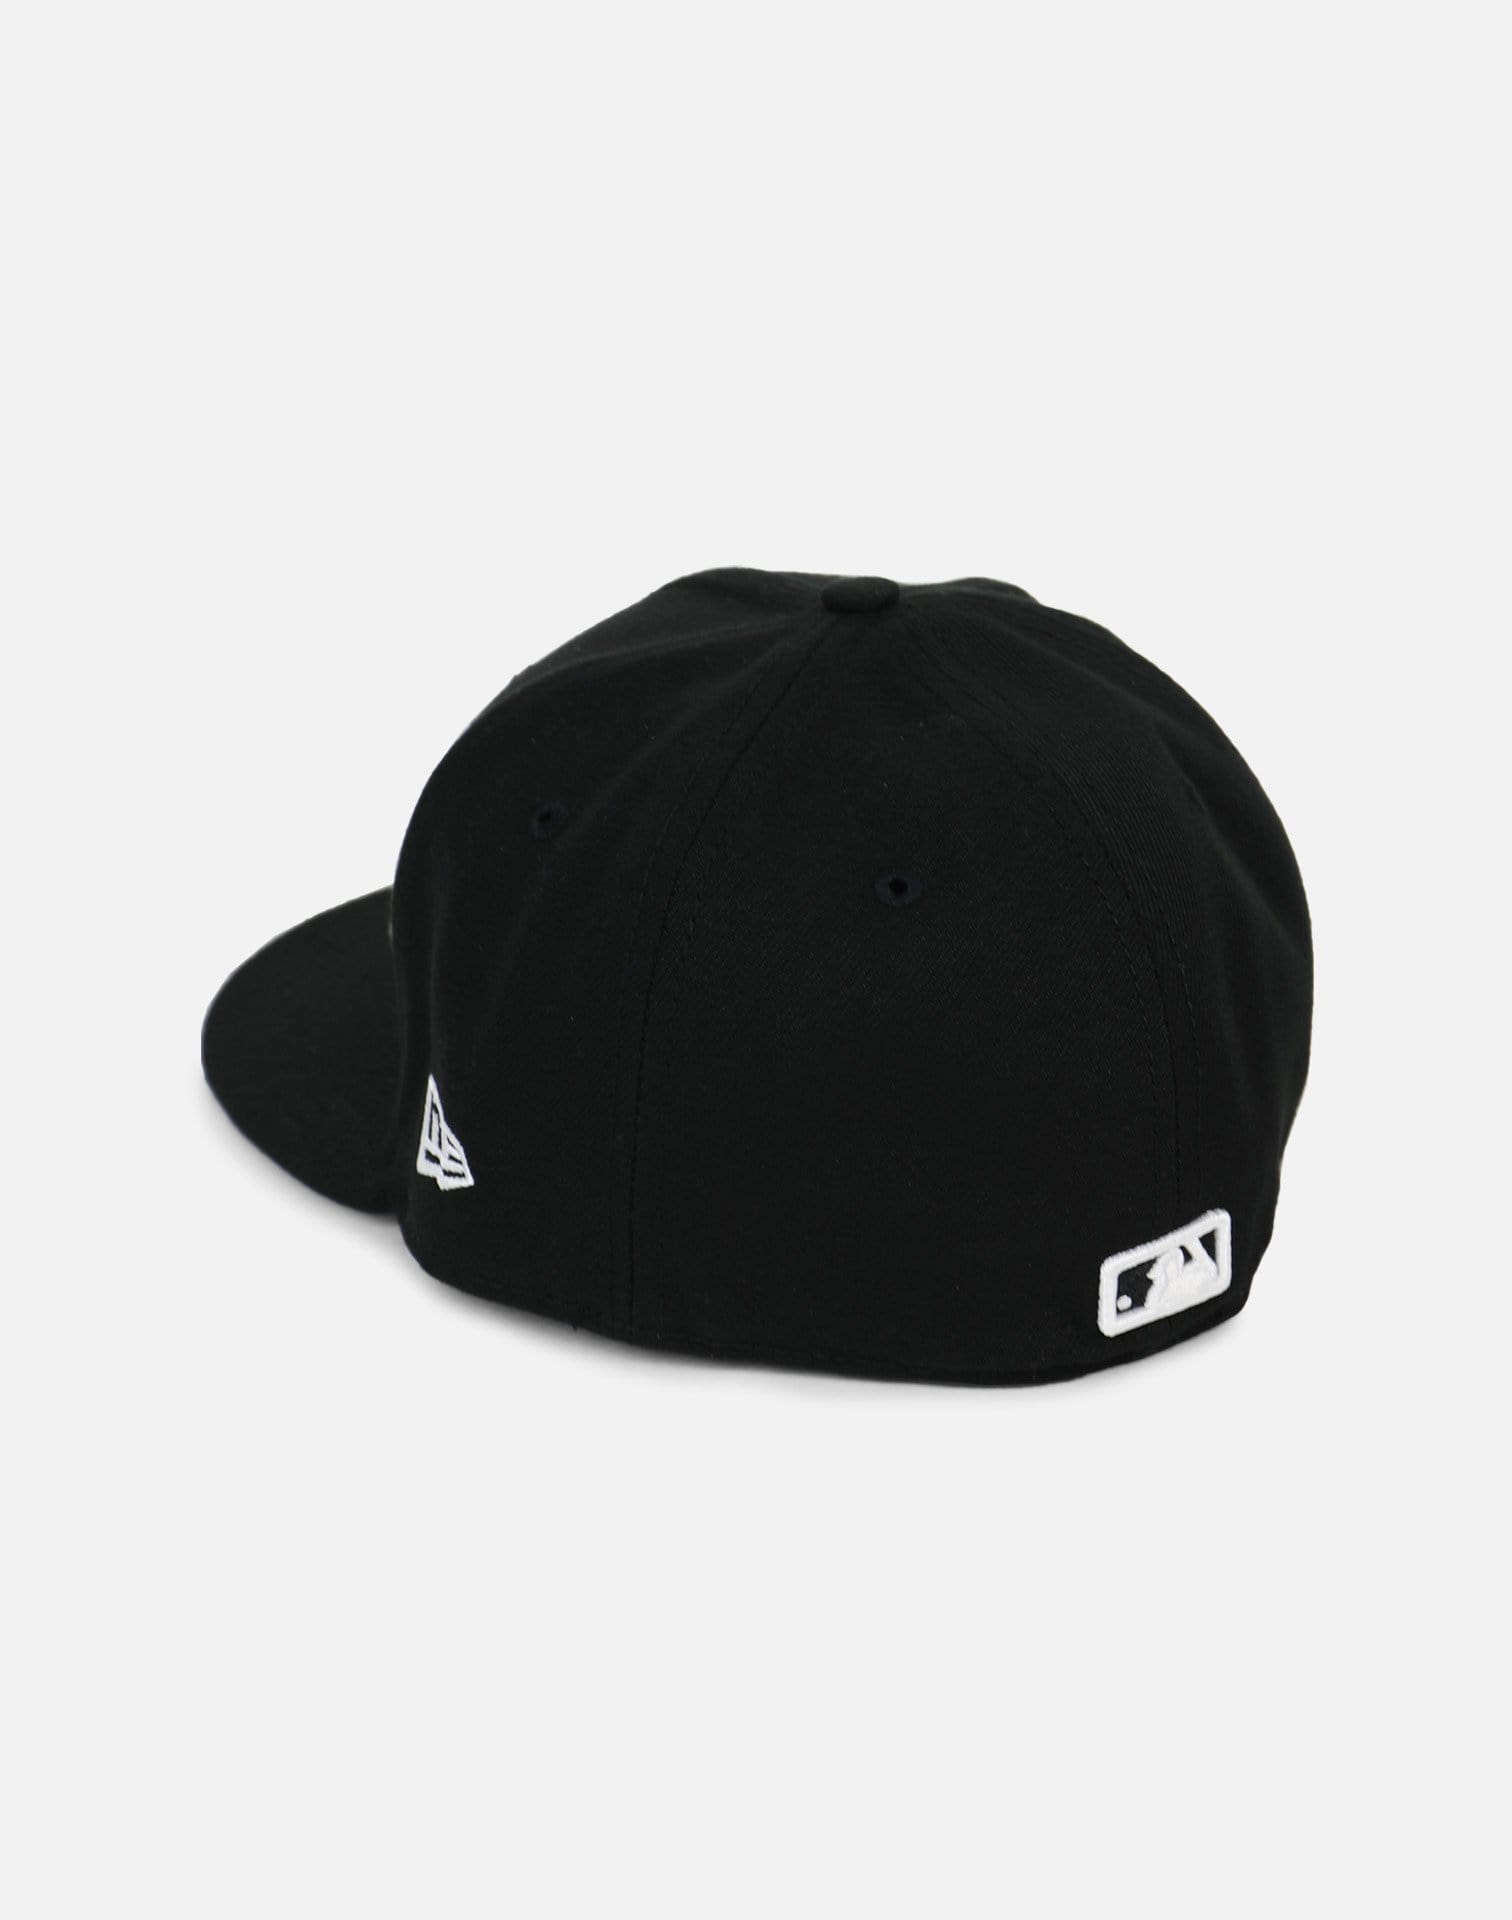 New Era Cleveland Indians Black Fitted Hat (Black)